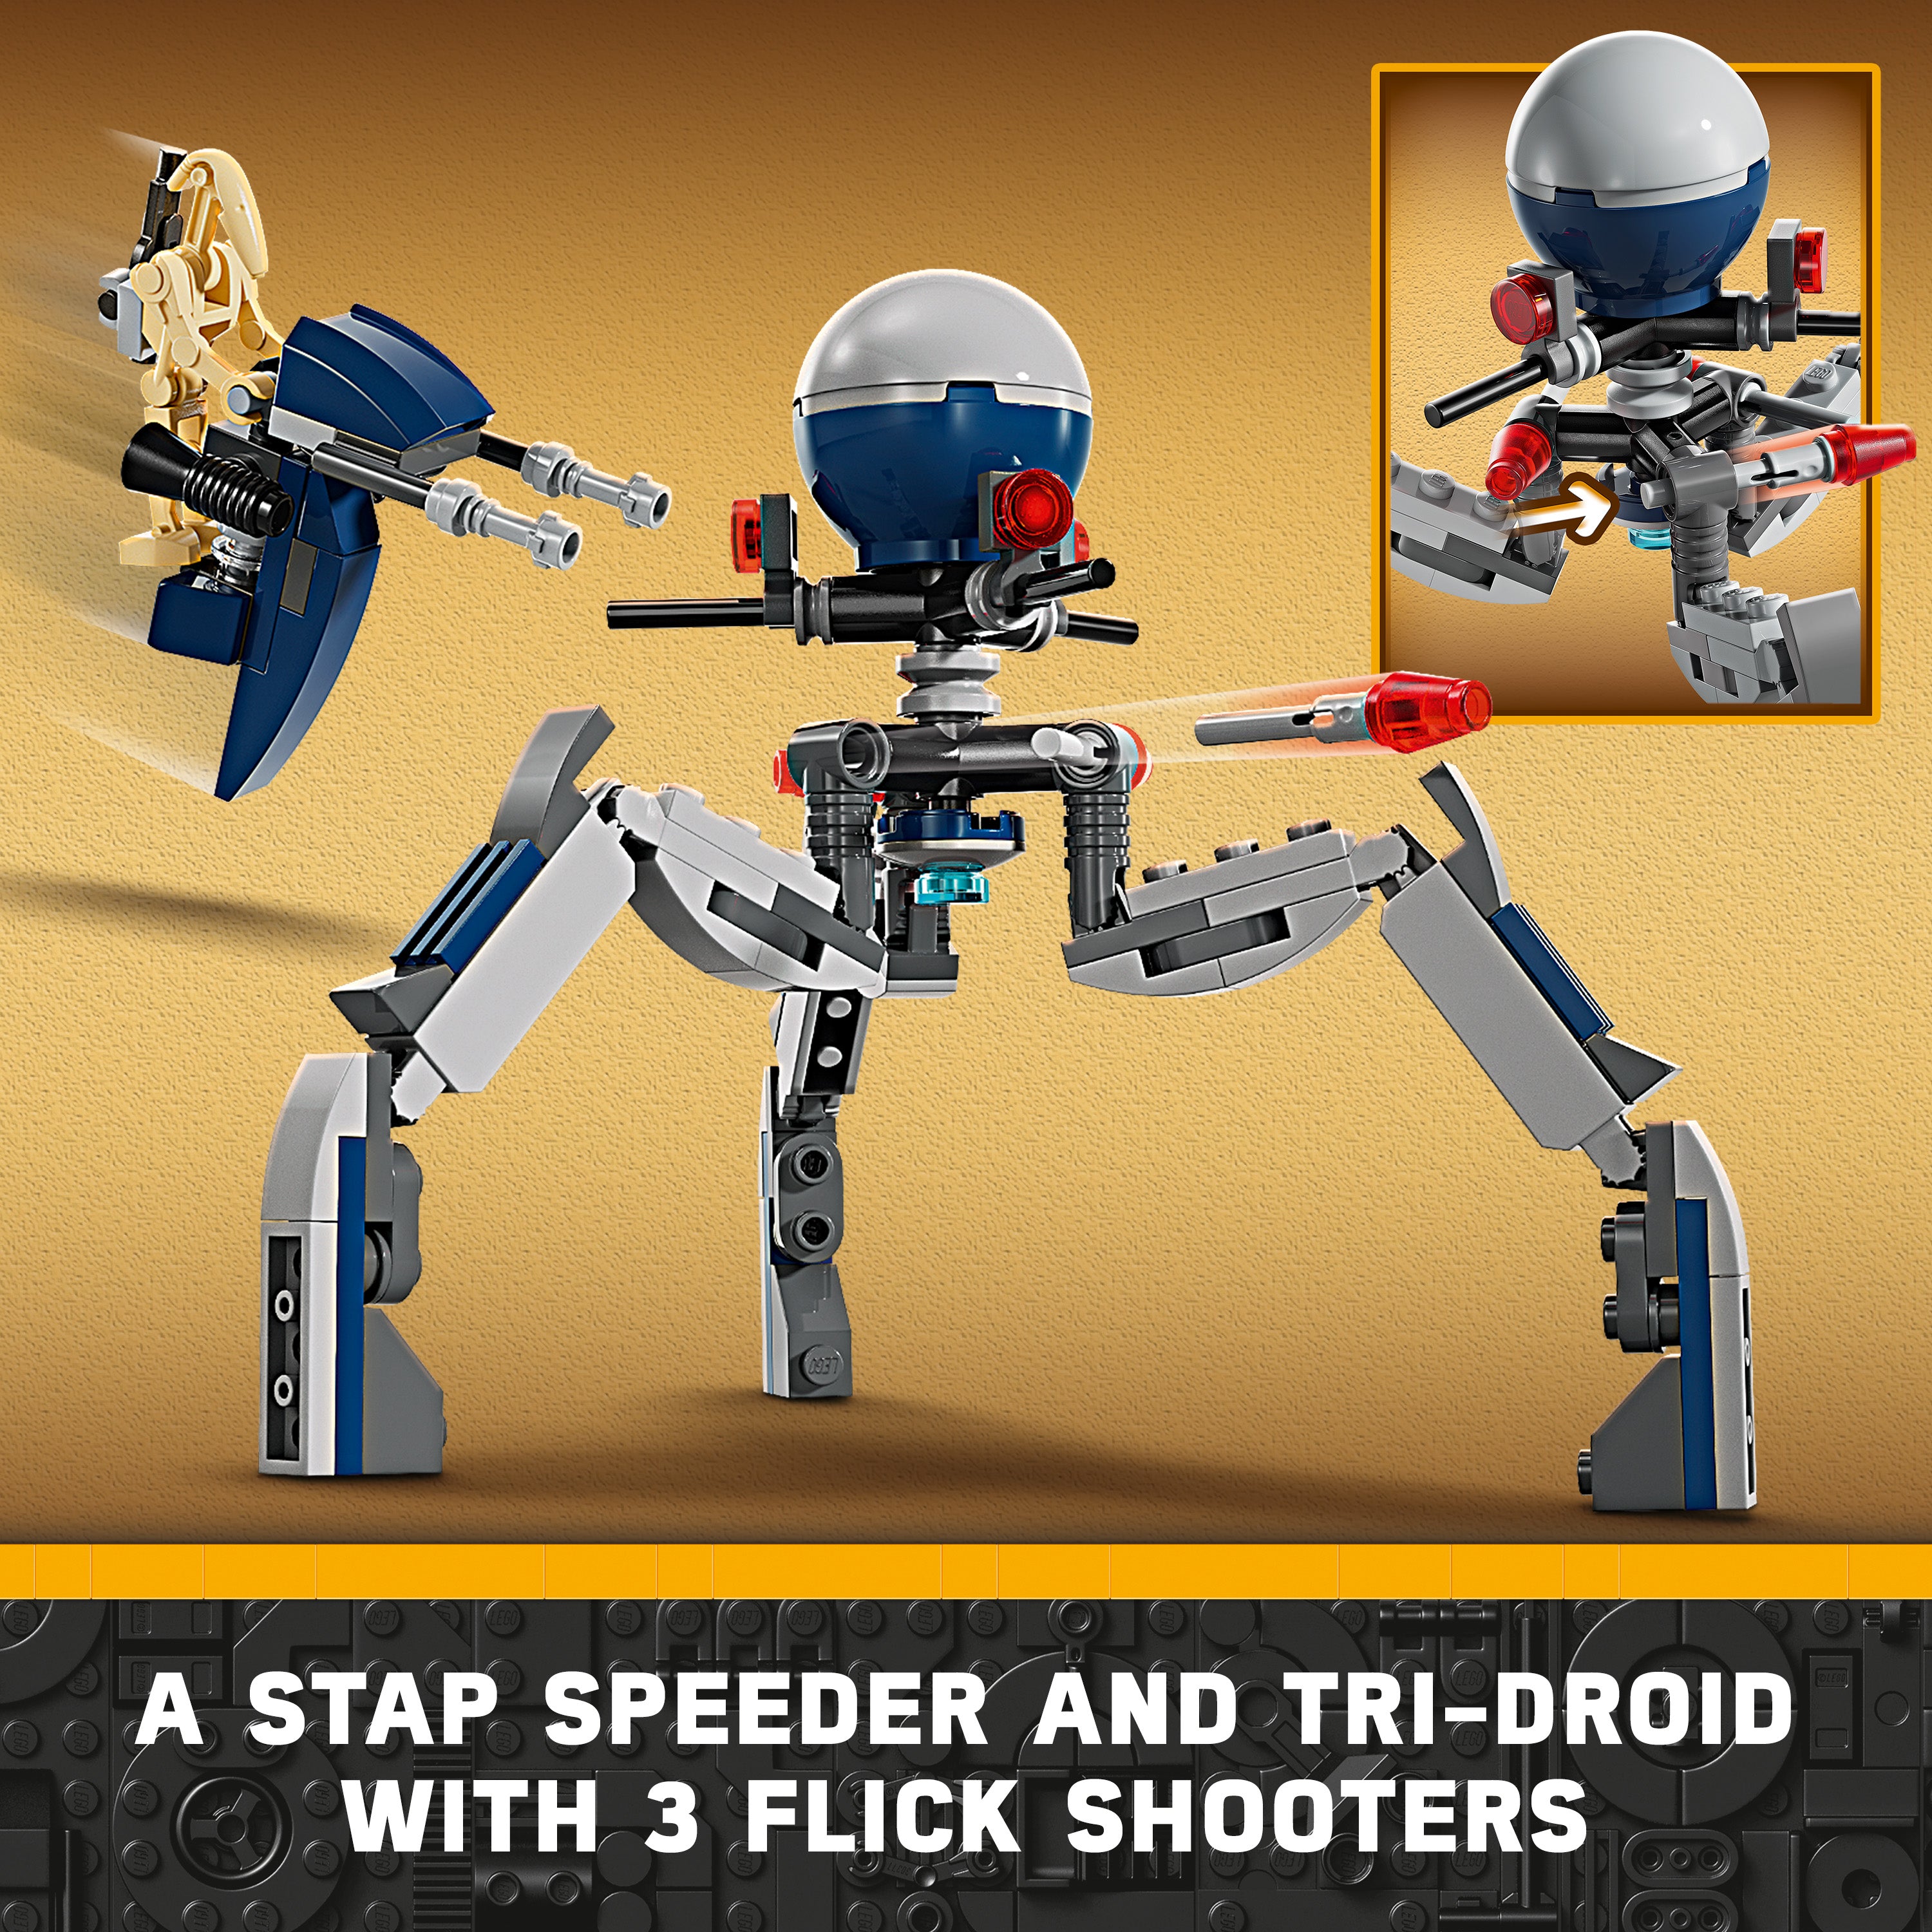 Lego 75372 Clone Trooper & Battle Droid